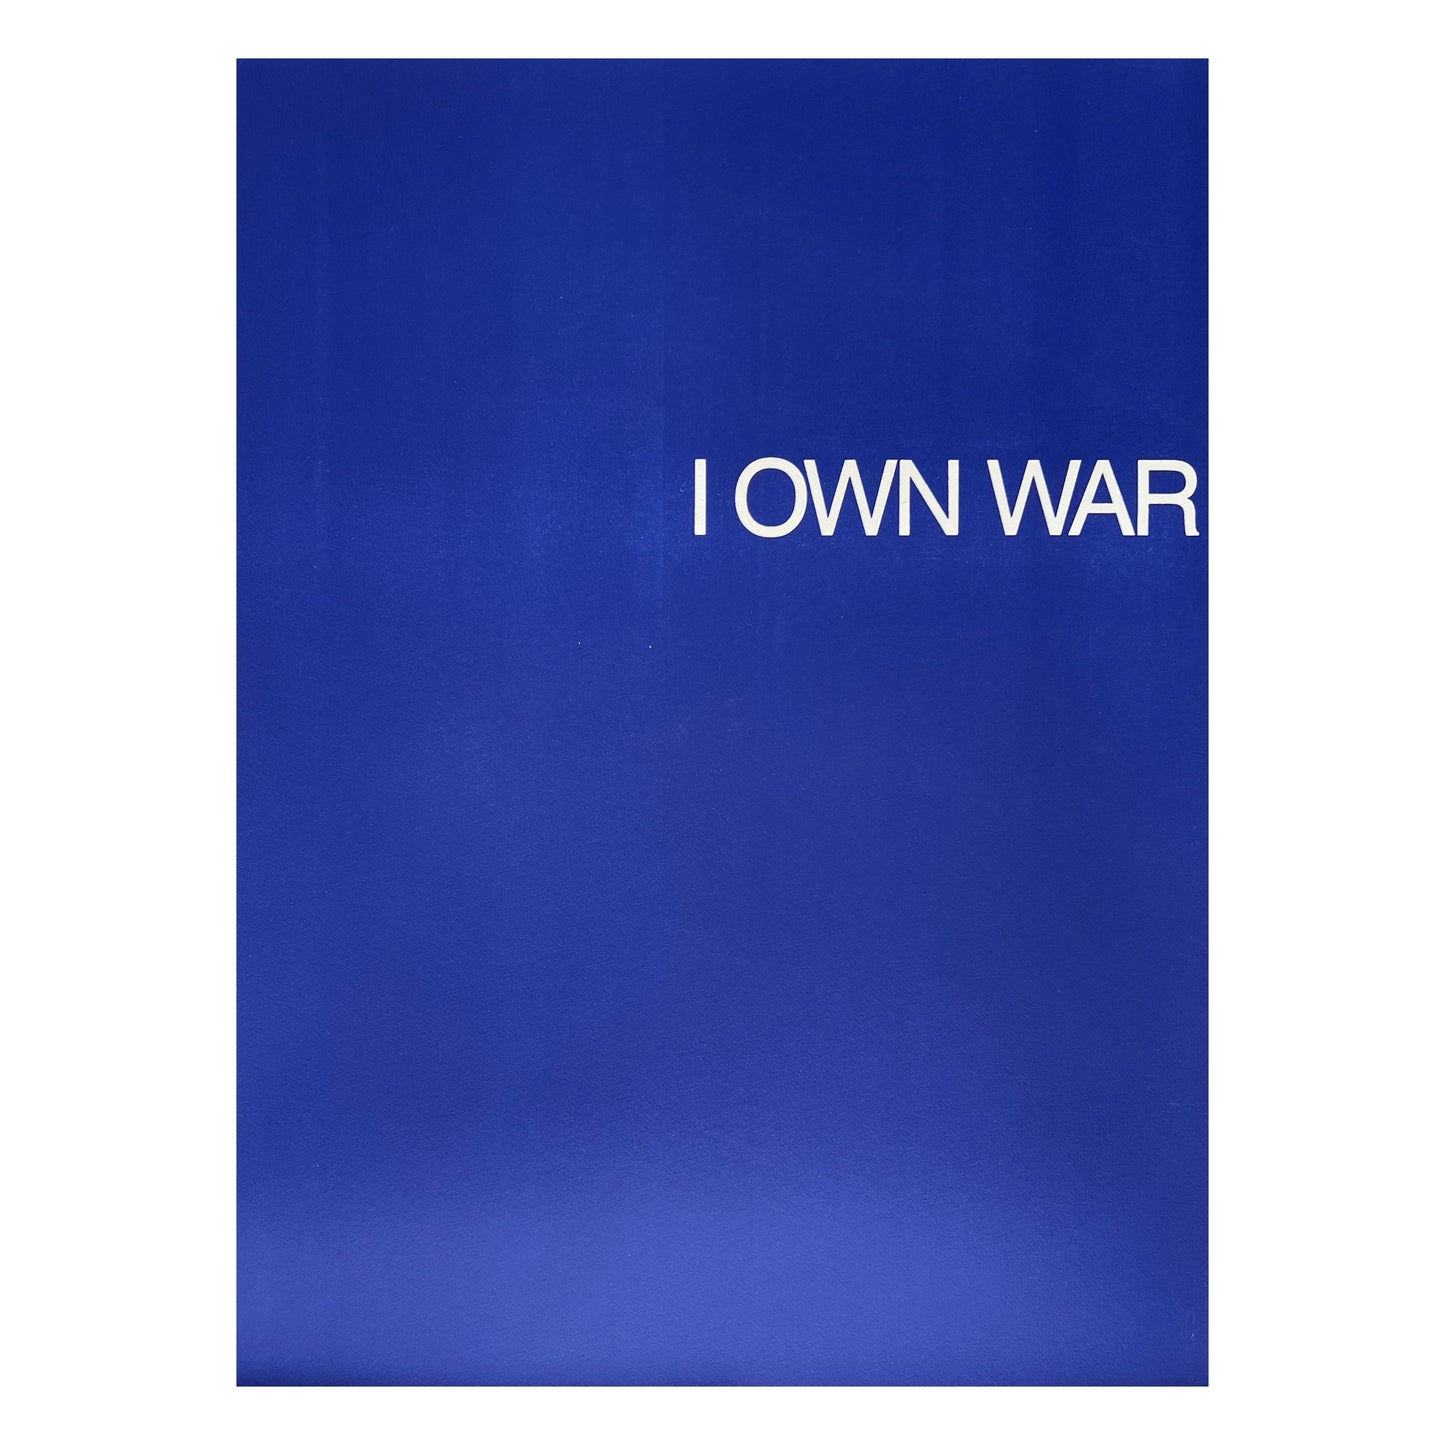 William Anastasi. “I own war”